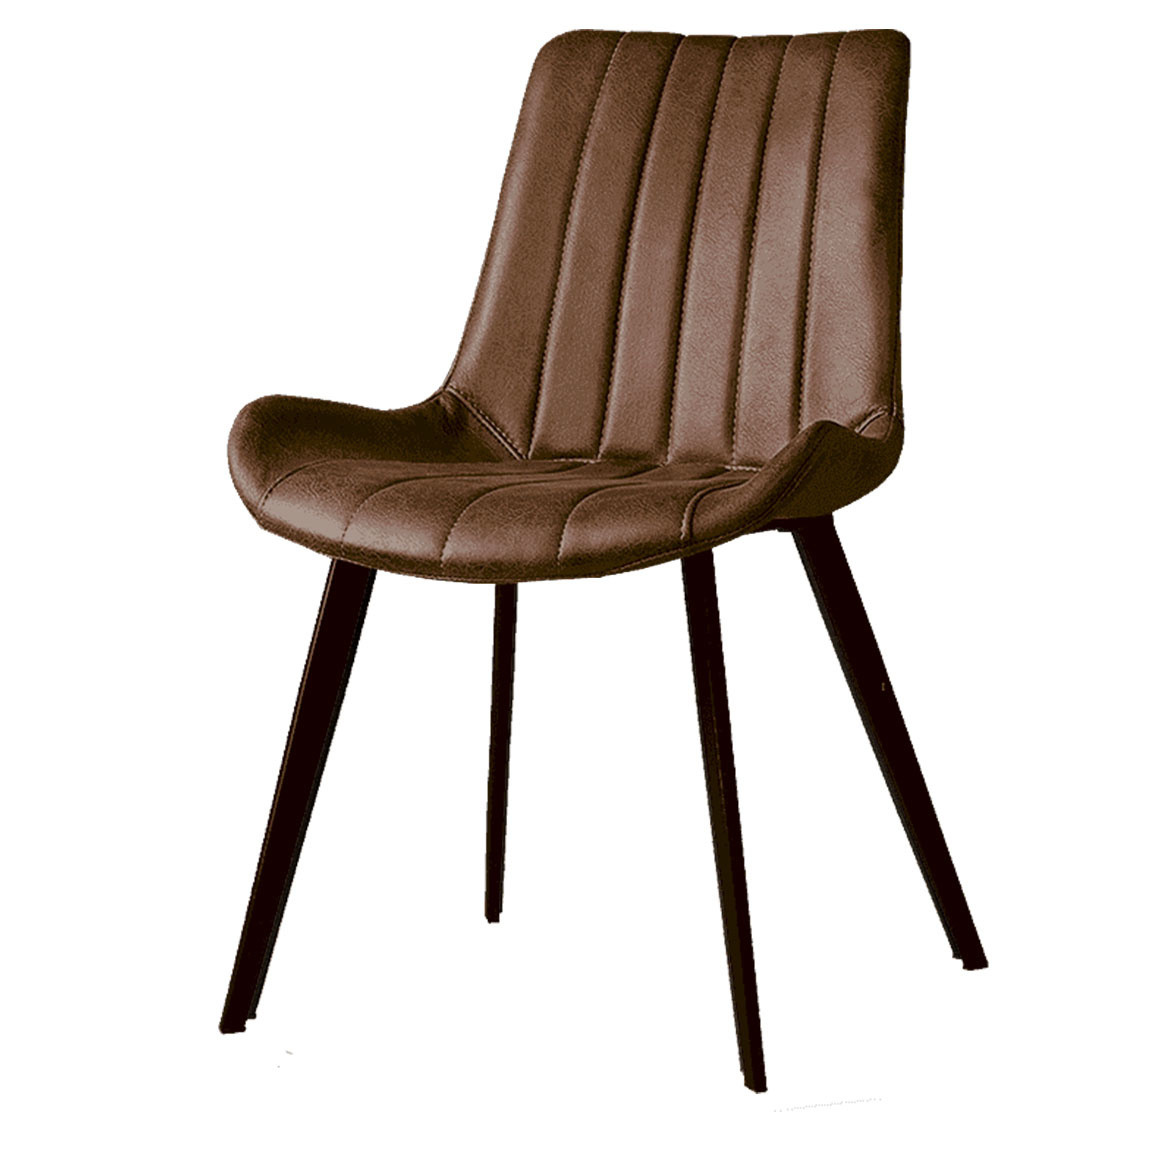 Rent a Dining chair Eljas Dark brown? Rent at KeyPro furniture rental!